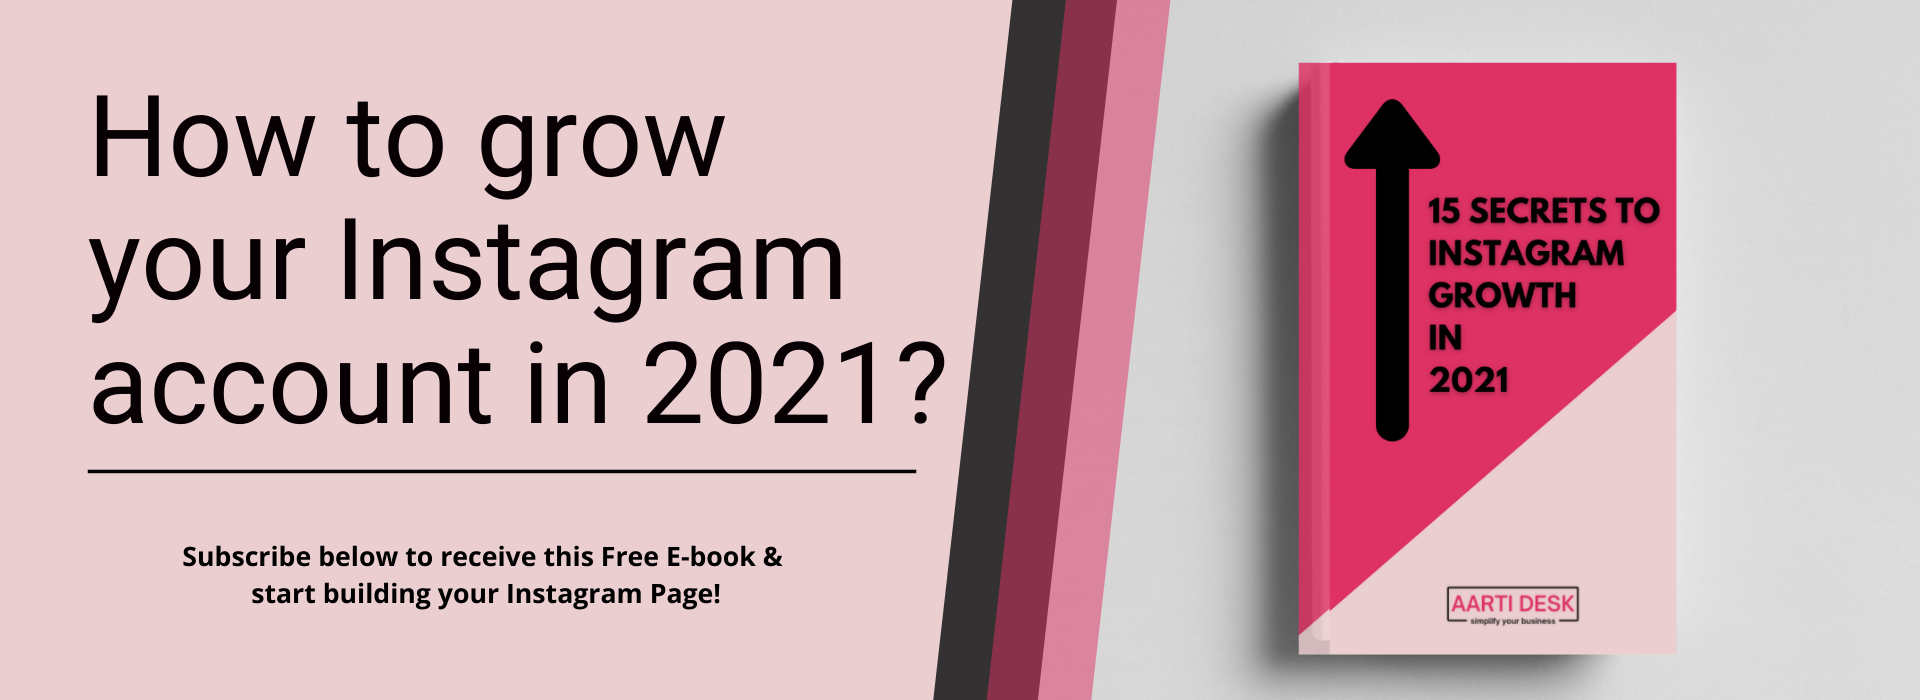 15 Secrets to Instagram Growth in 2021| FREE E-book | AARTI DESK